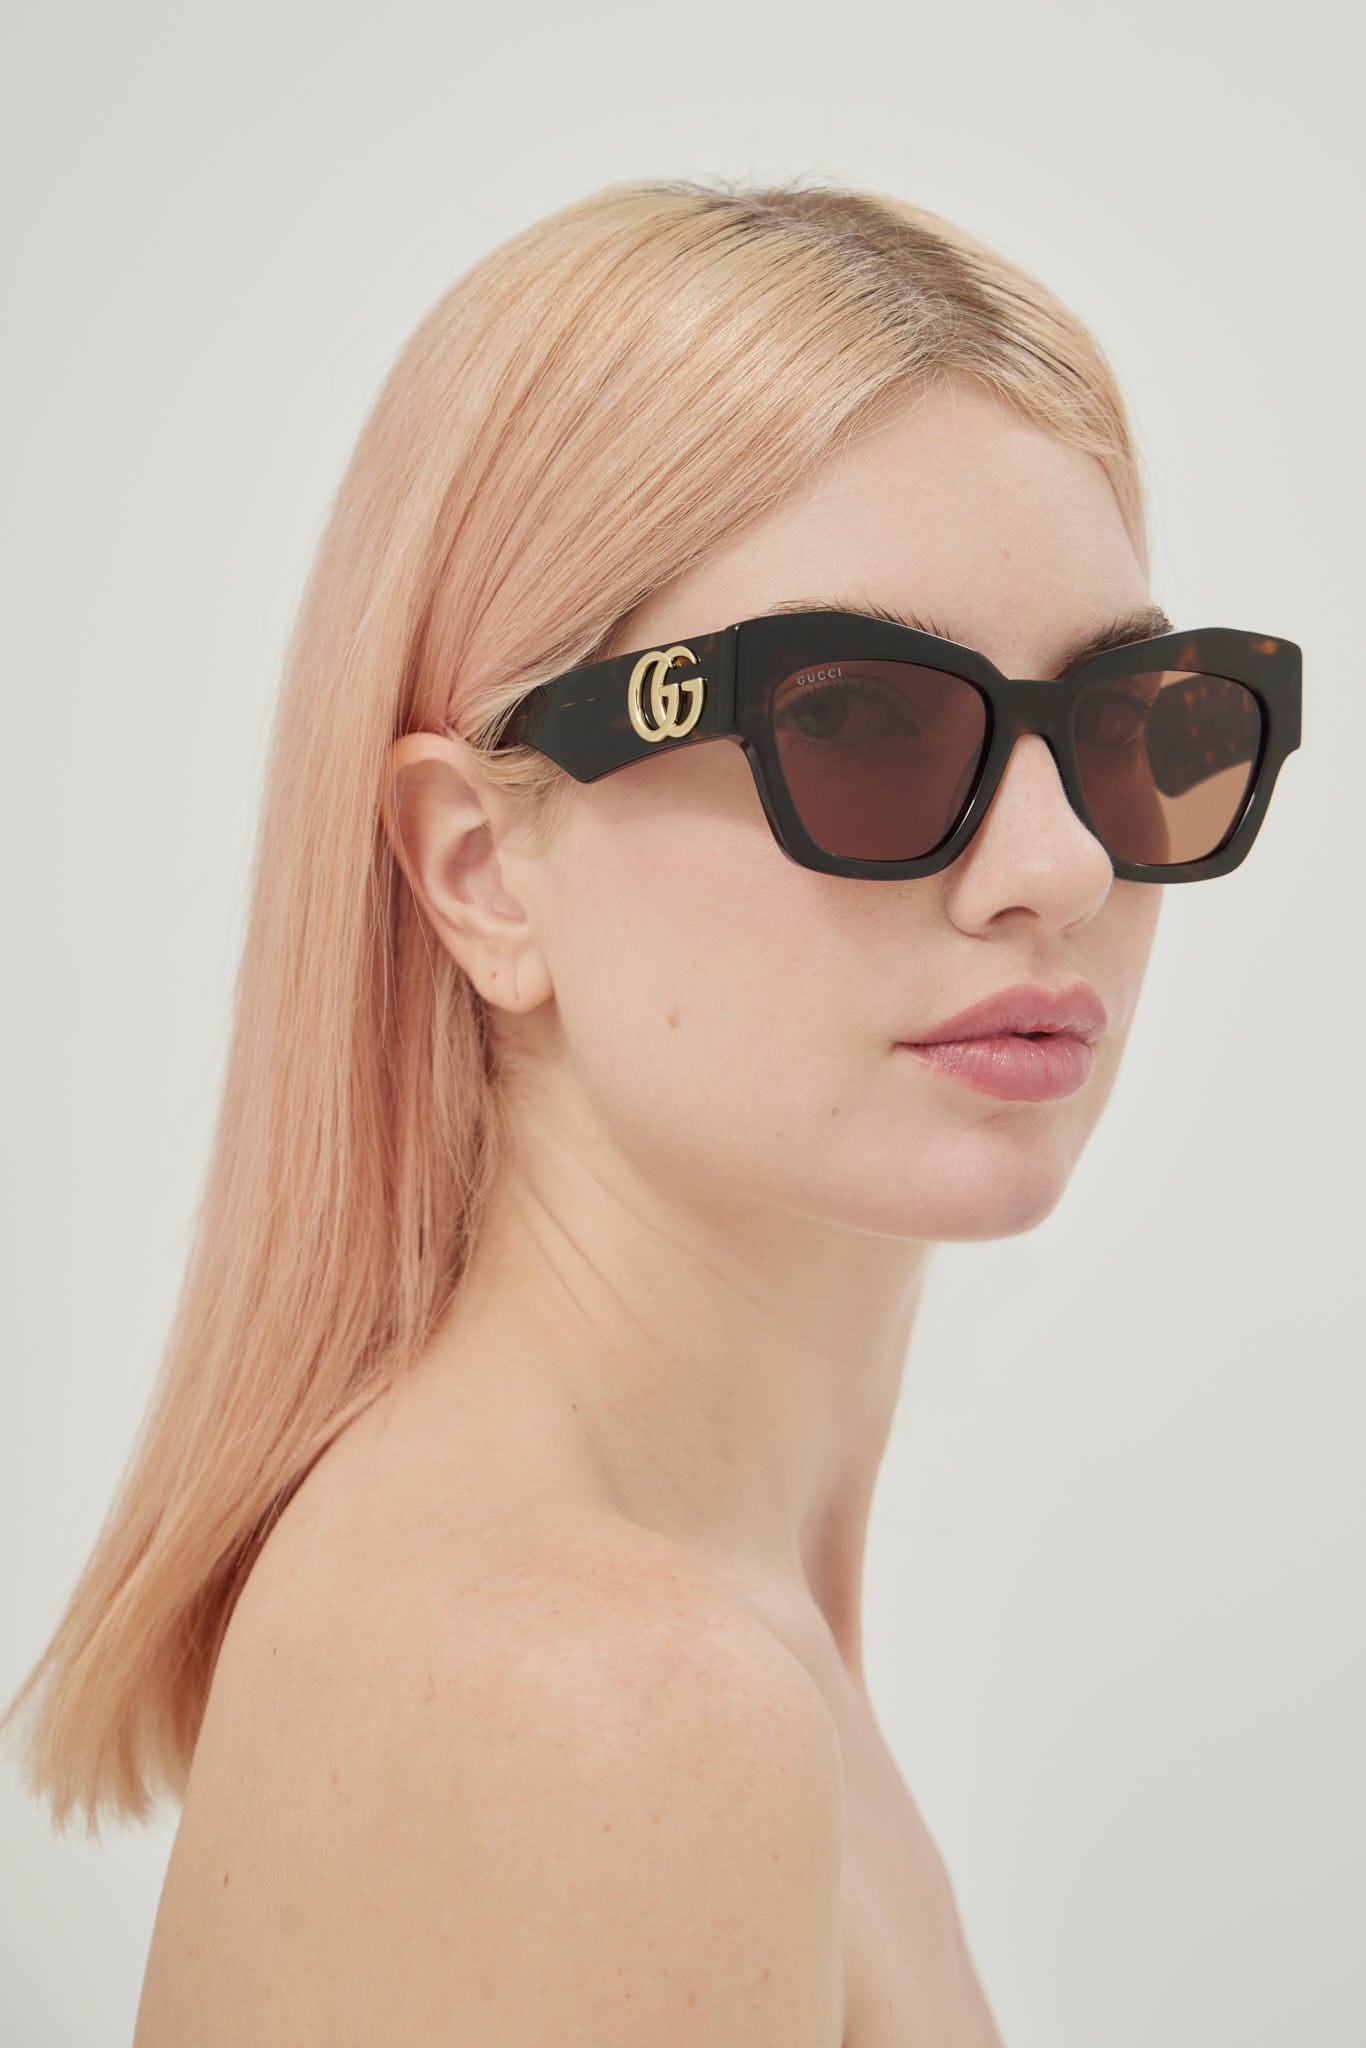 Gucci havana chuncky cat eye sunglasses - Eyewear Club